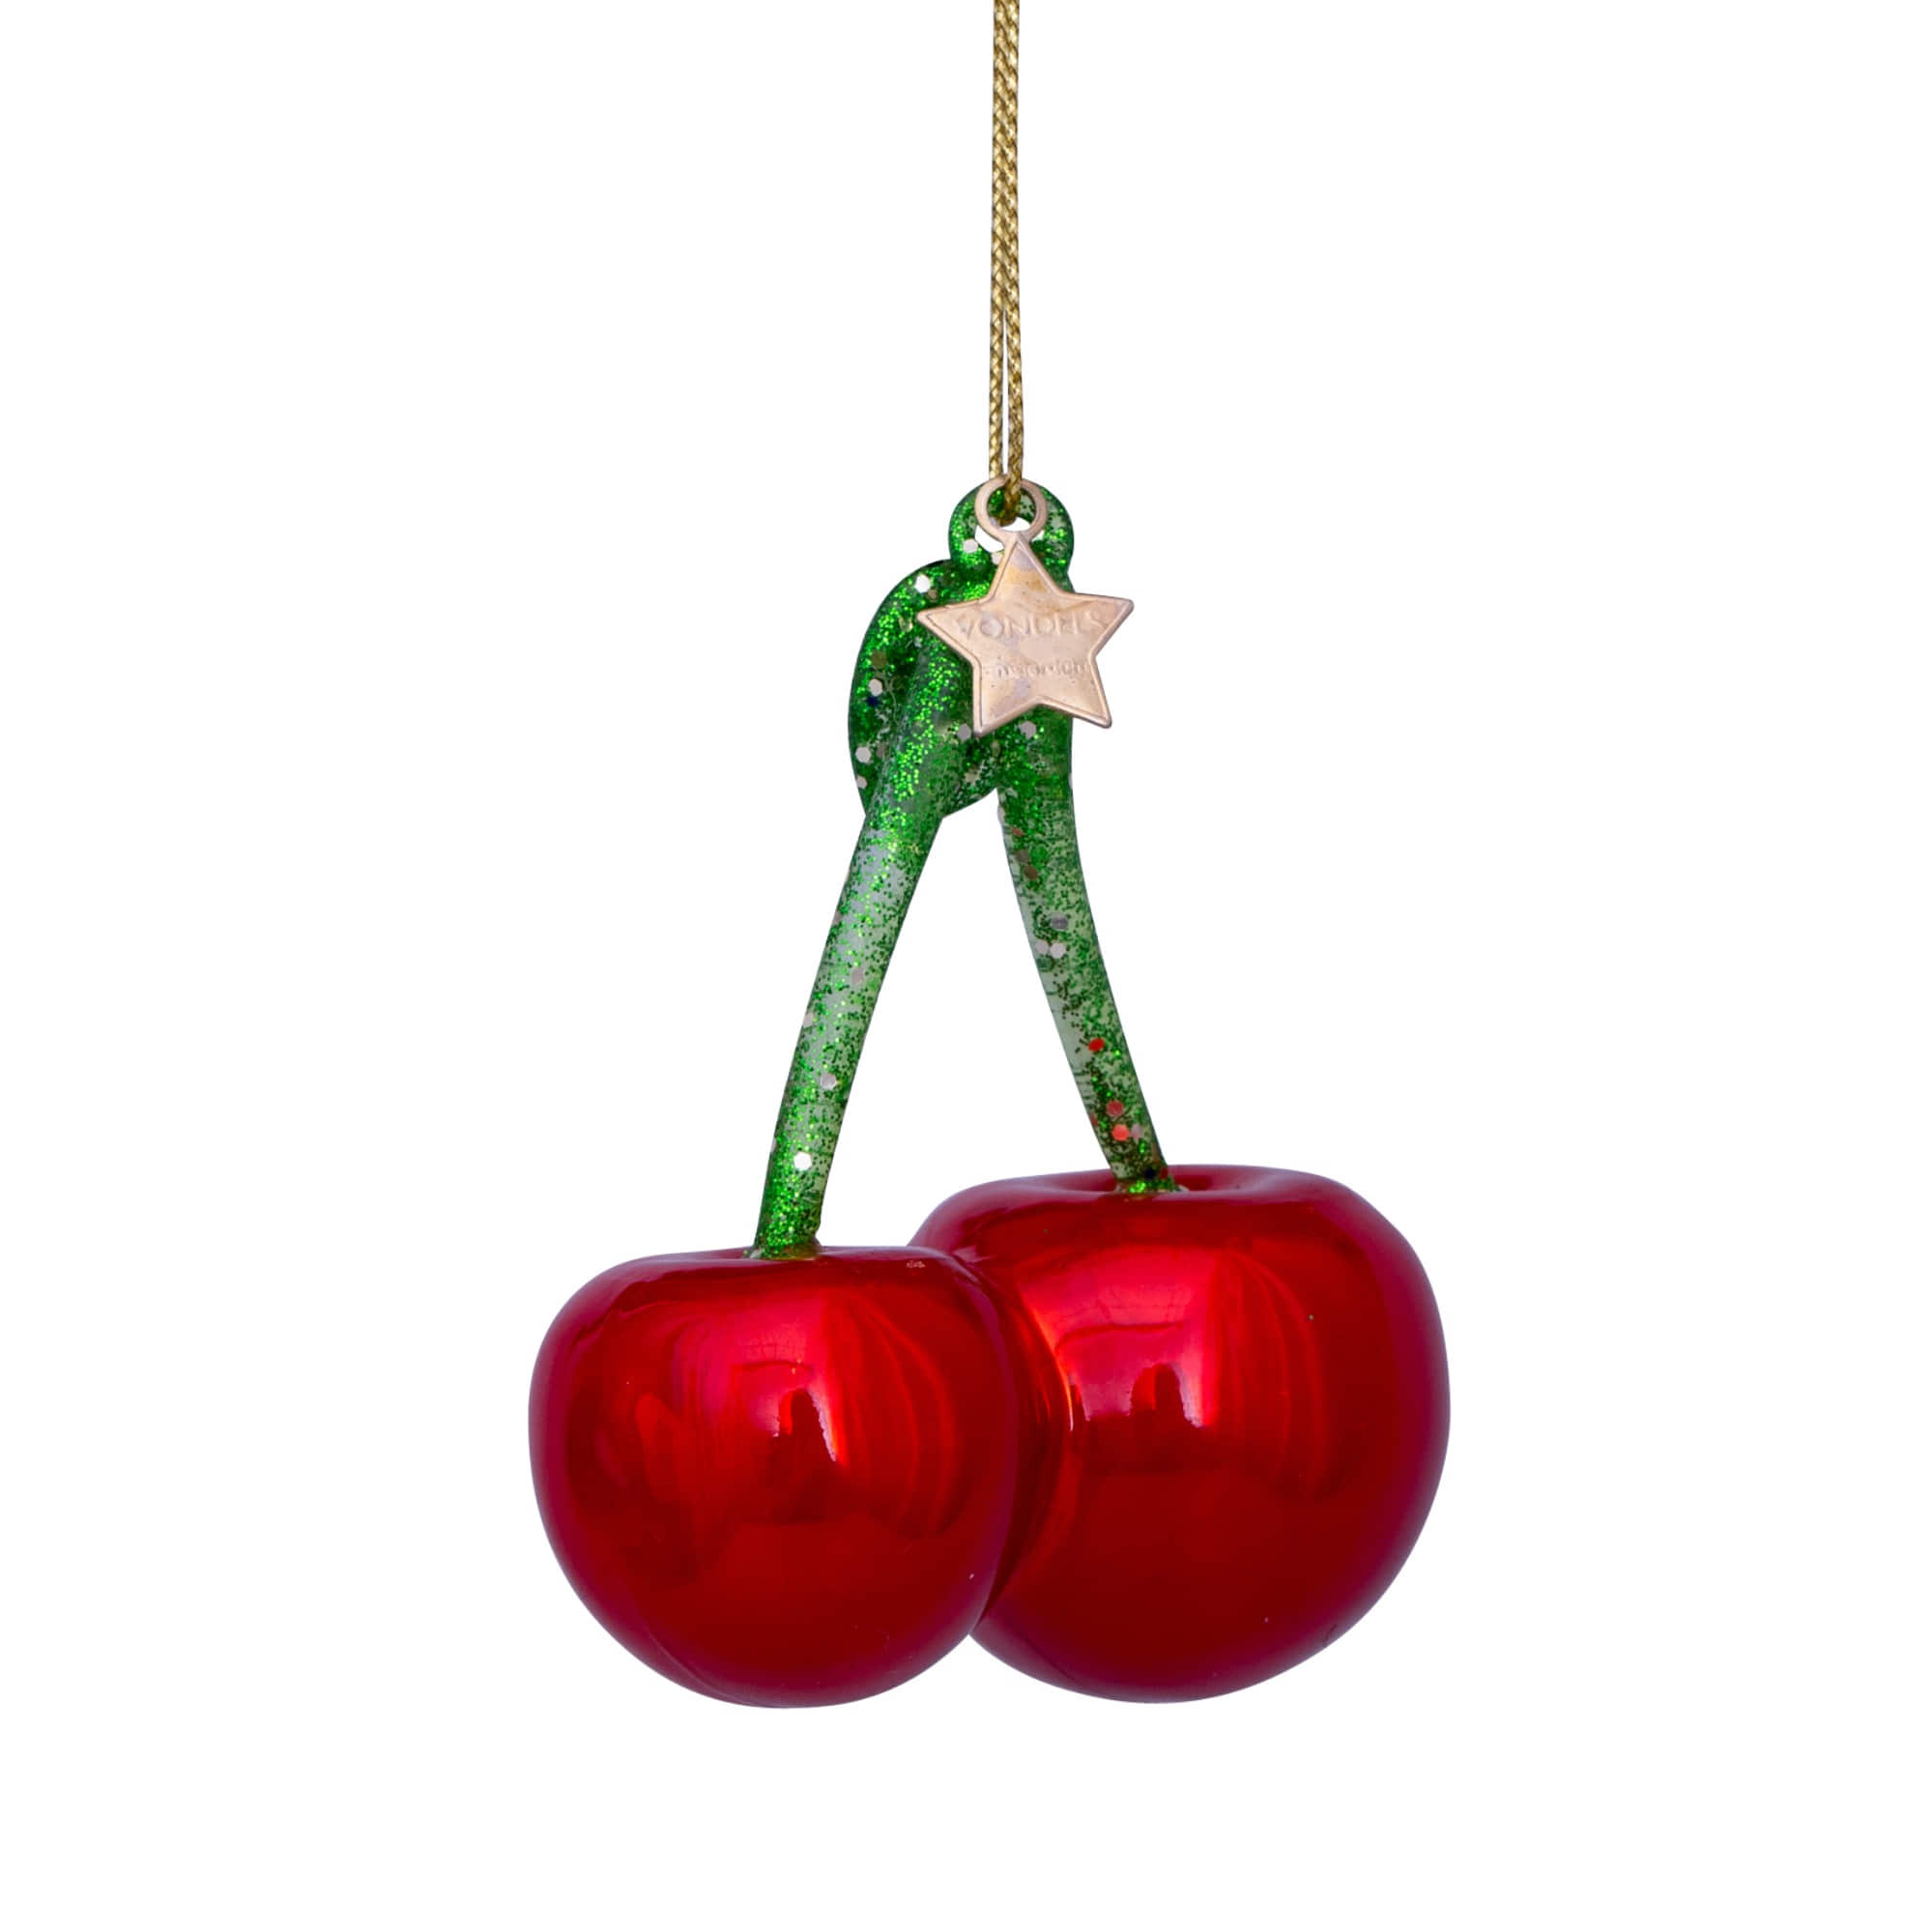 VONDELS Ornament Glass Red Pearl Cherry